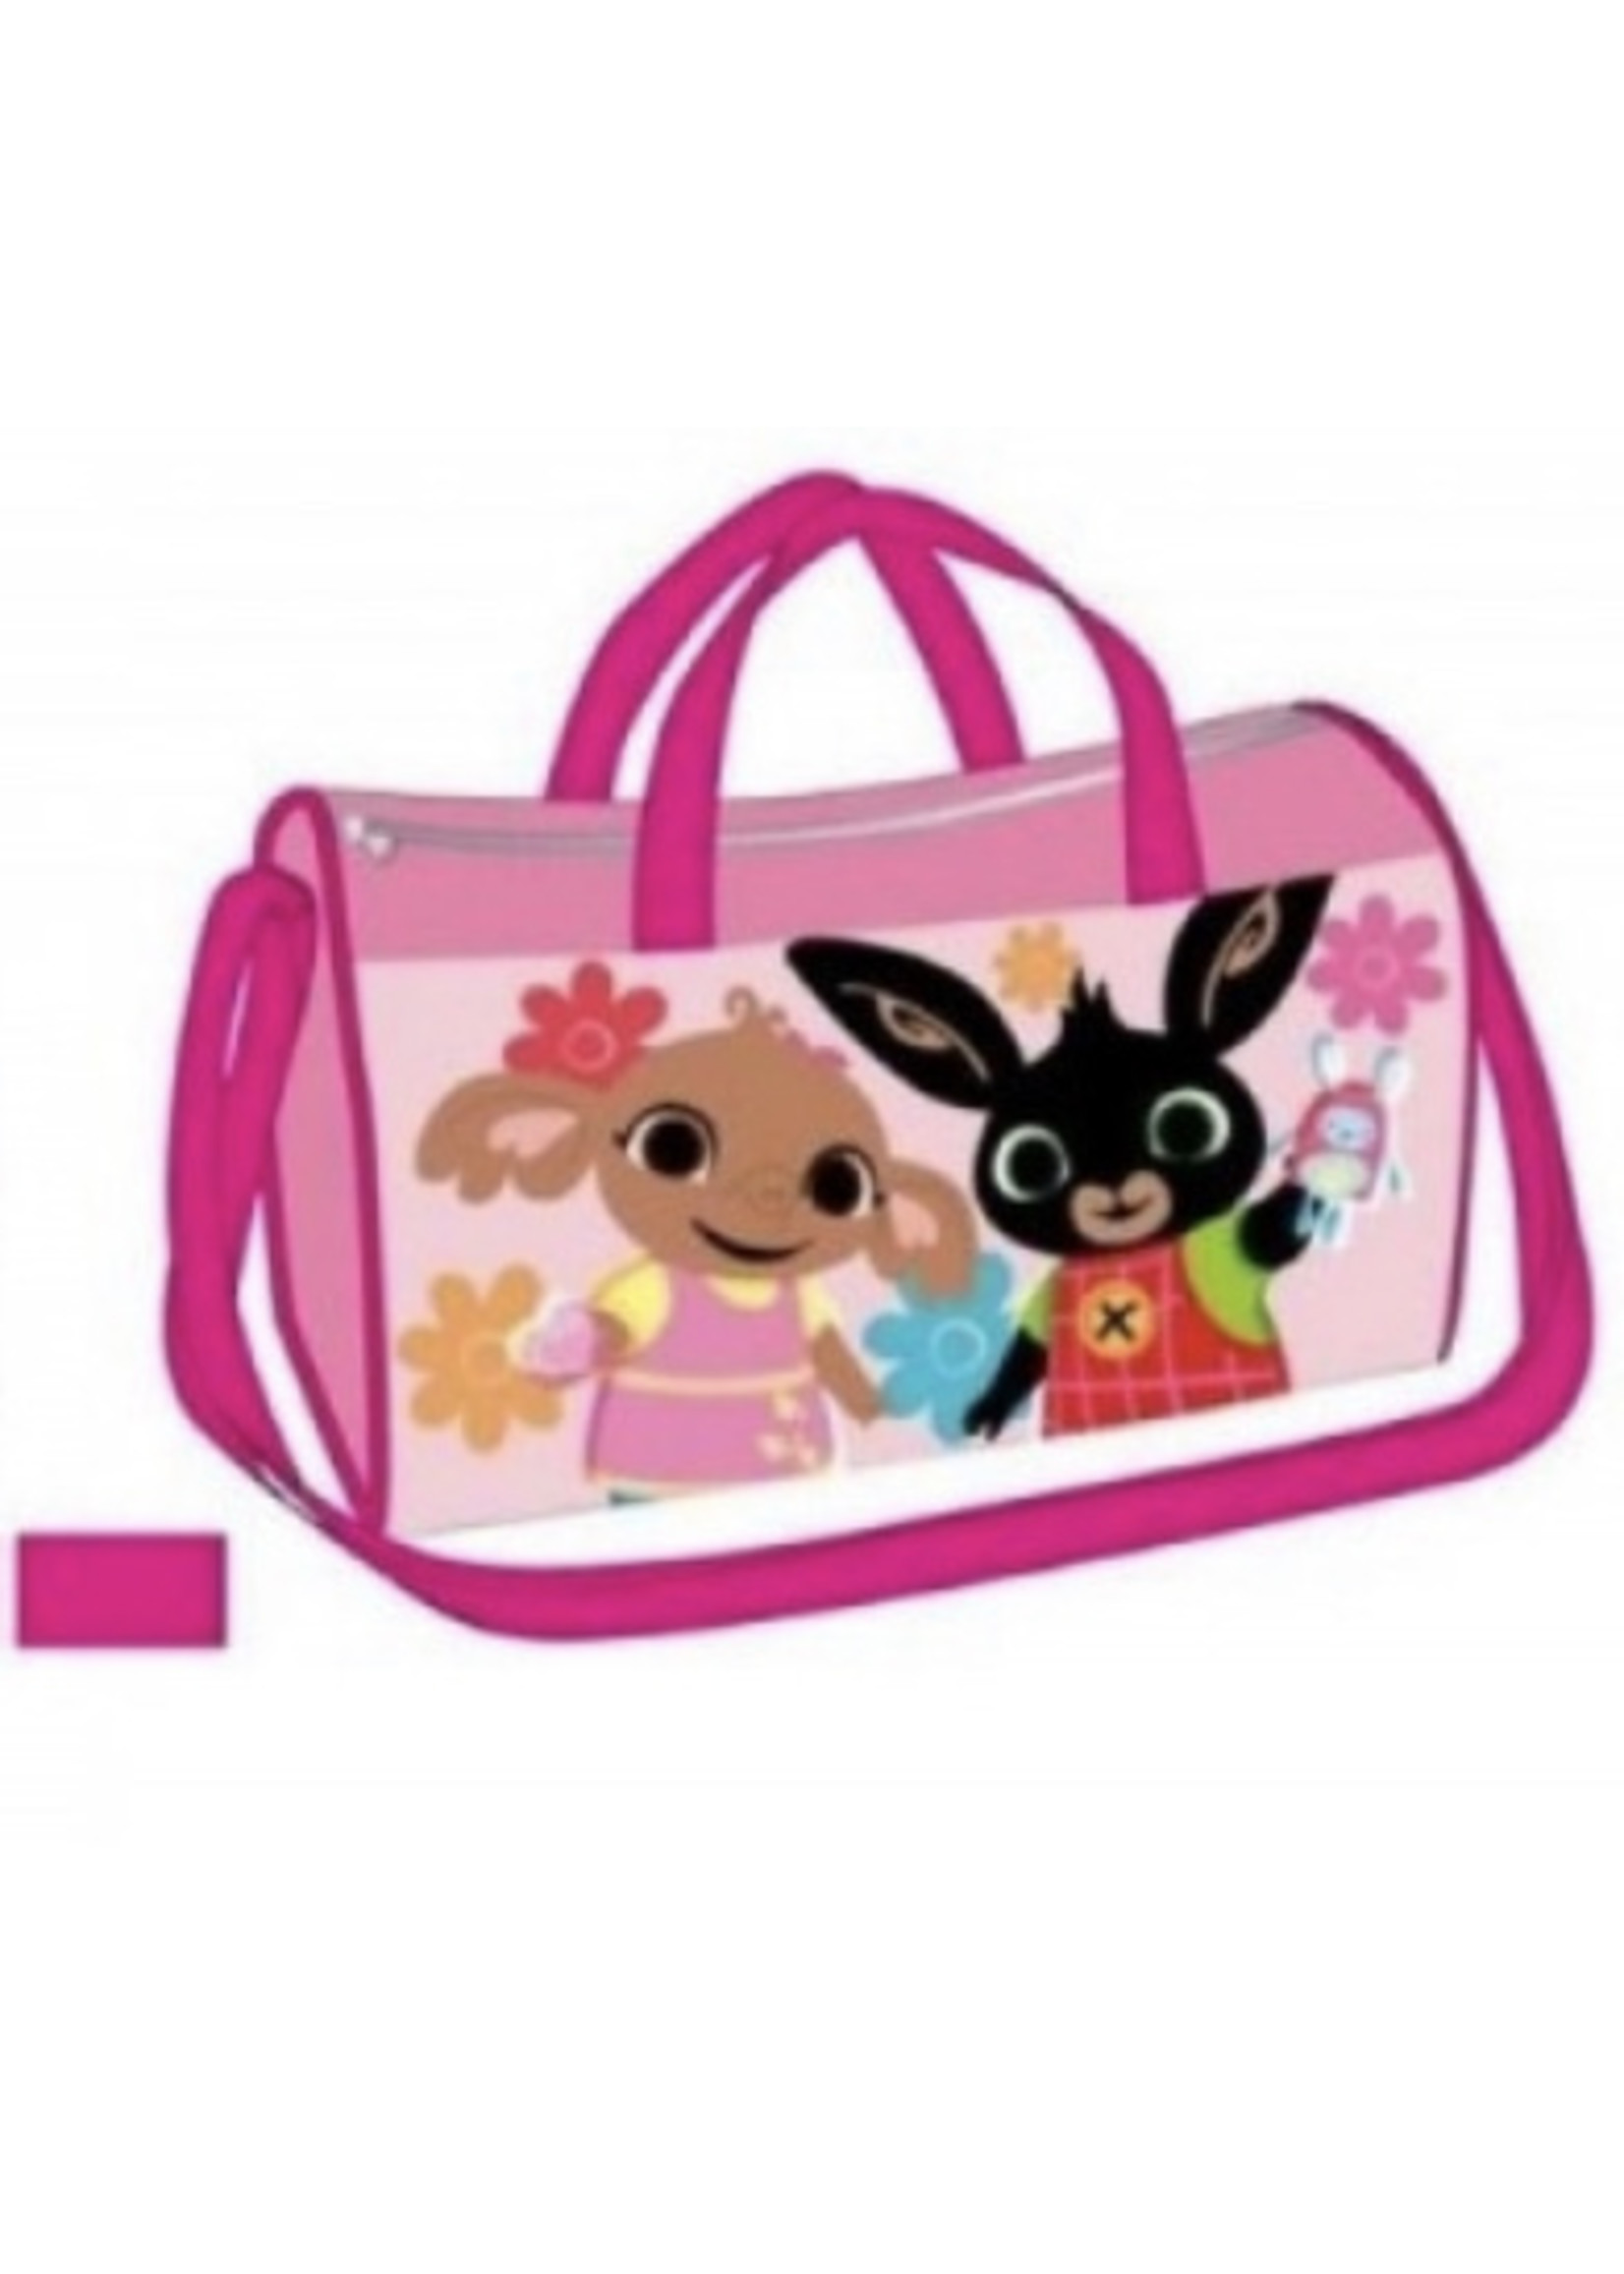 Bing Bunny Bing sports bag from BING light pink